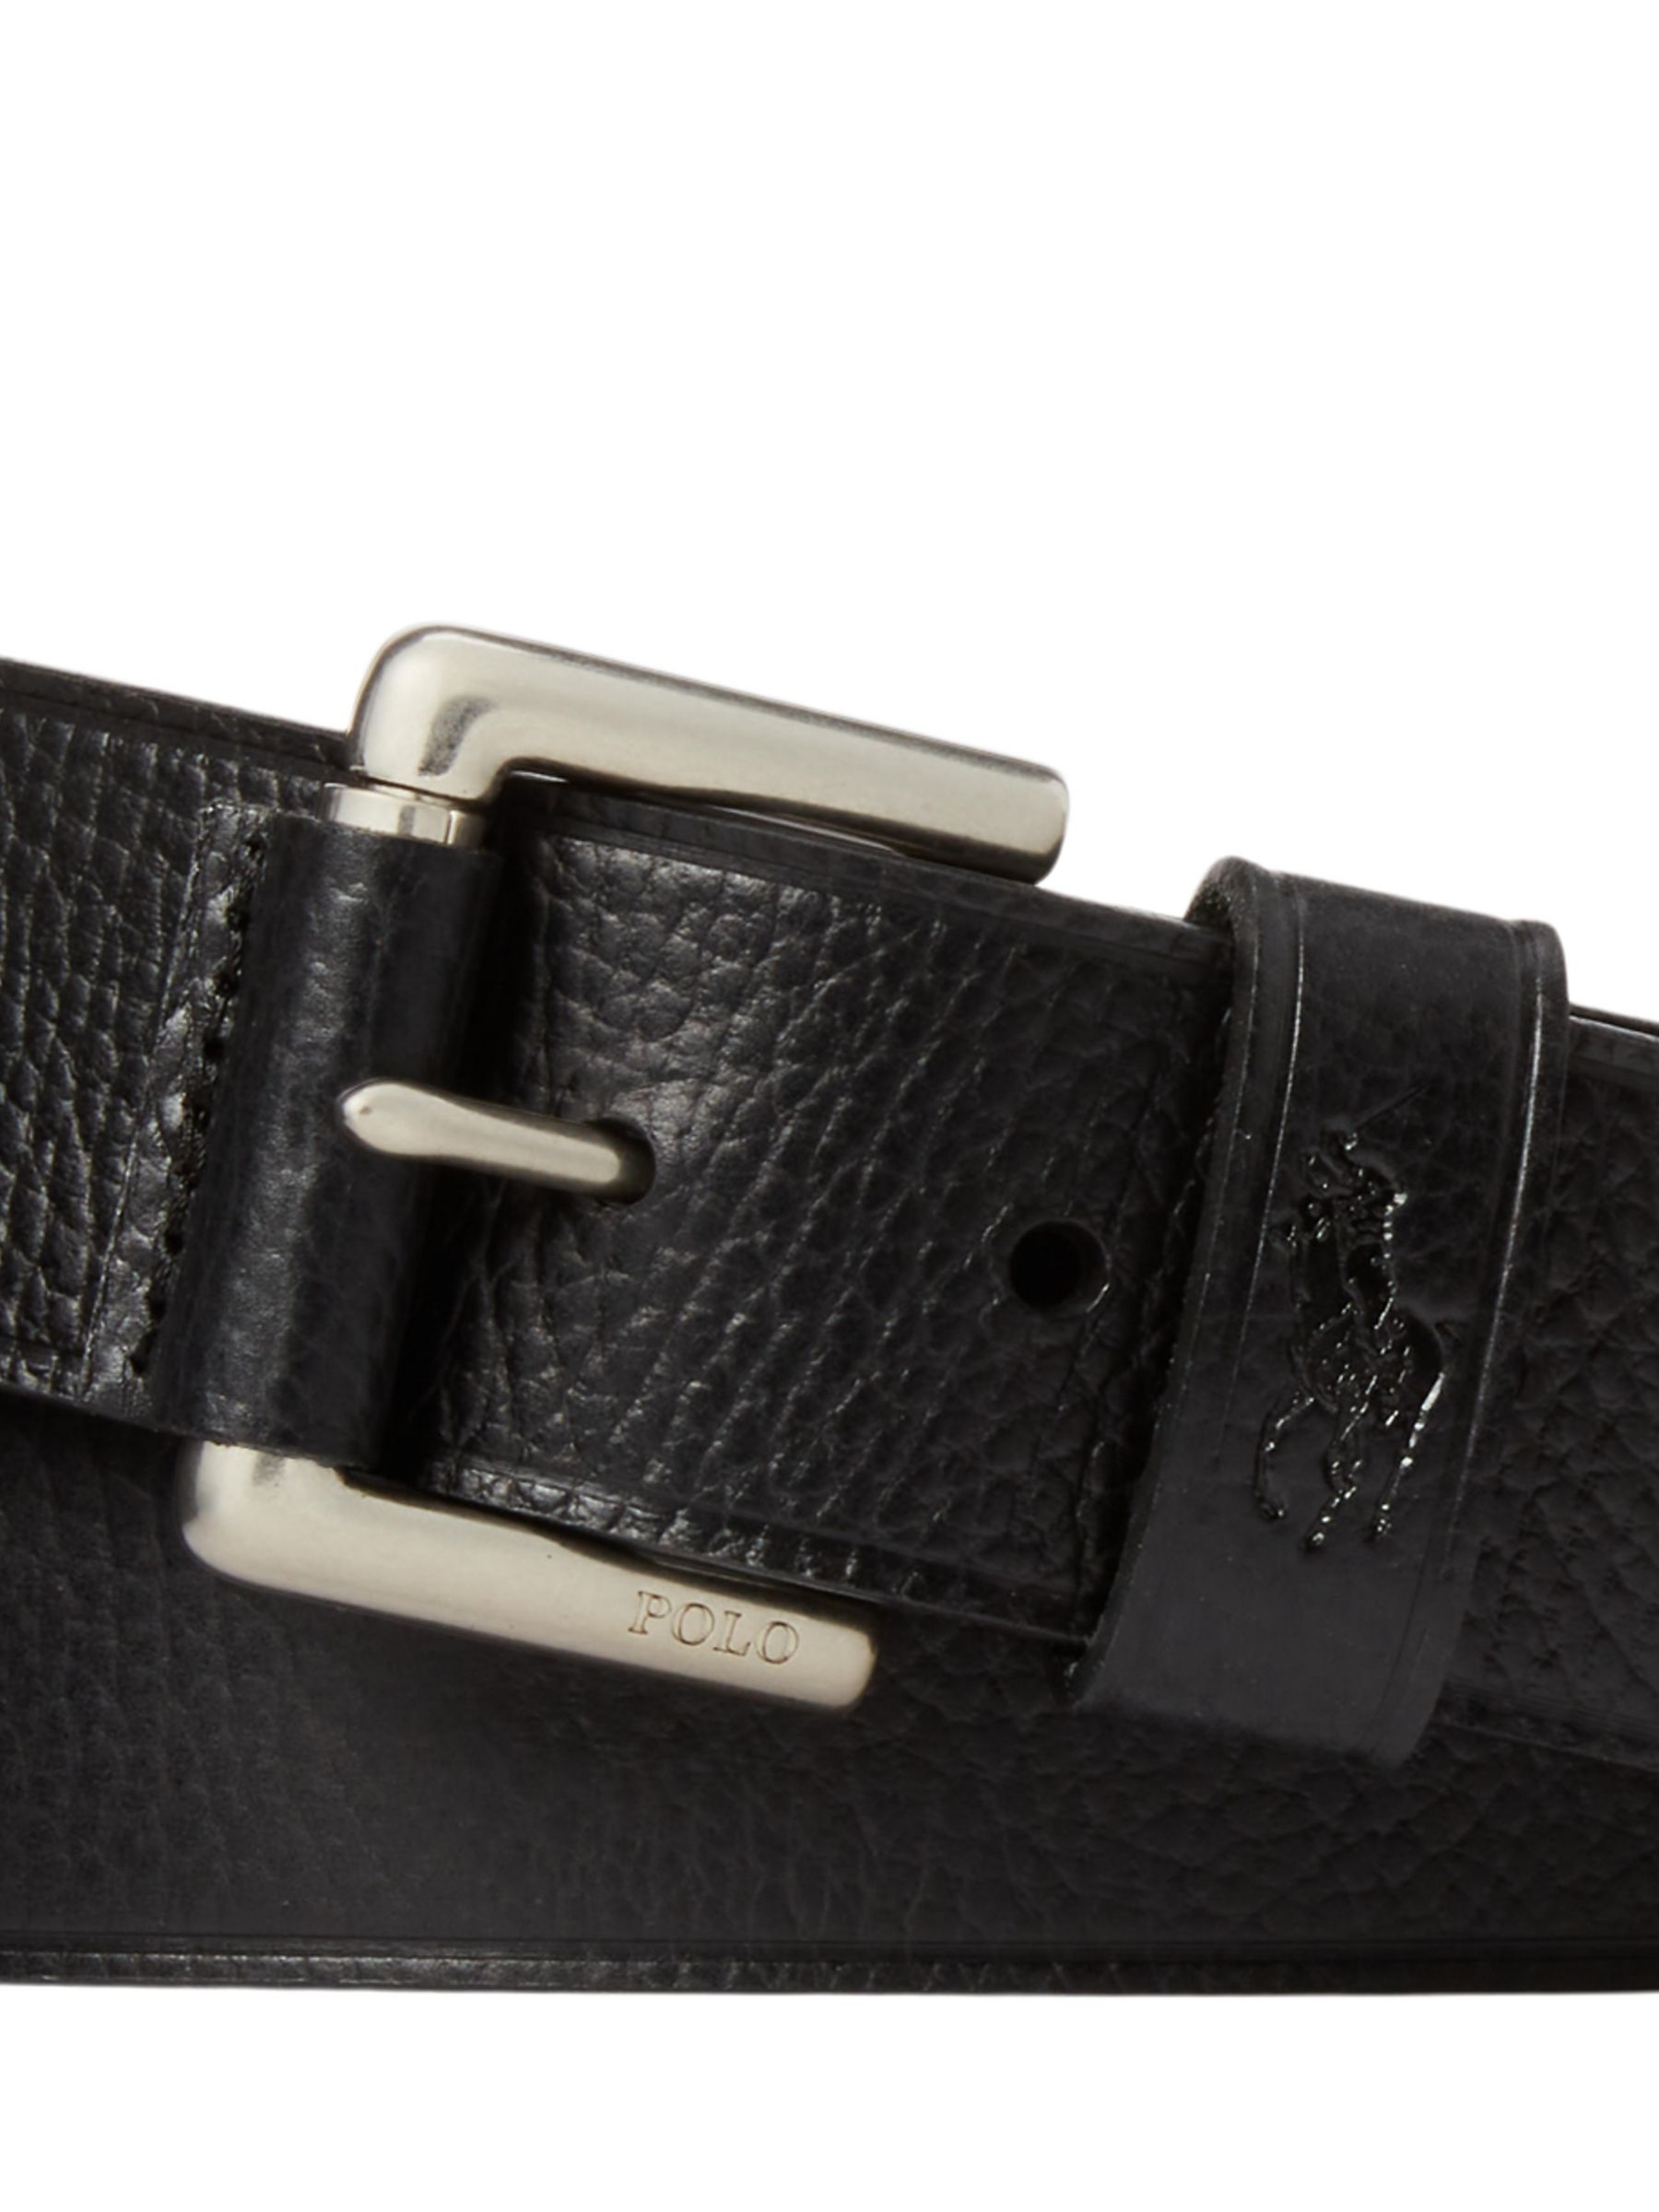 Buy Polo Ralph Lauren Pebbled Leather Belt, Black Online at johnlewis.com